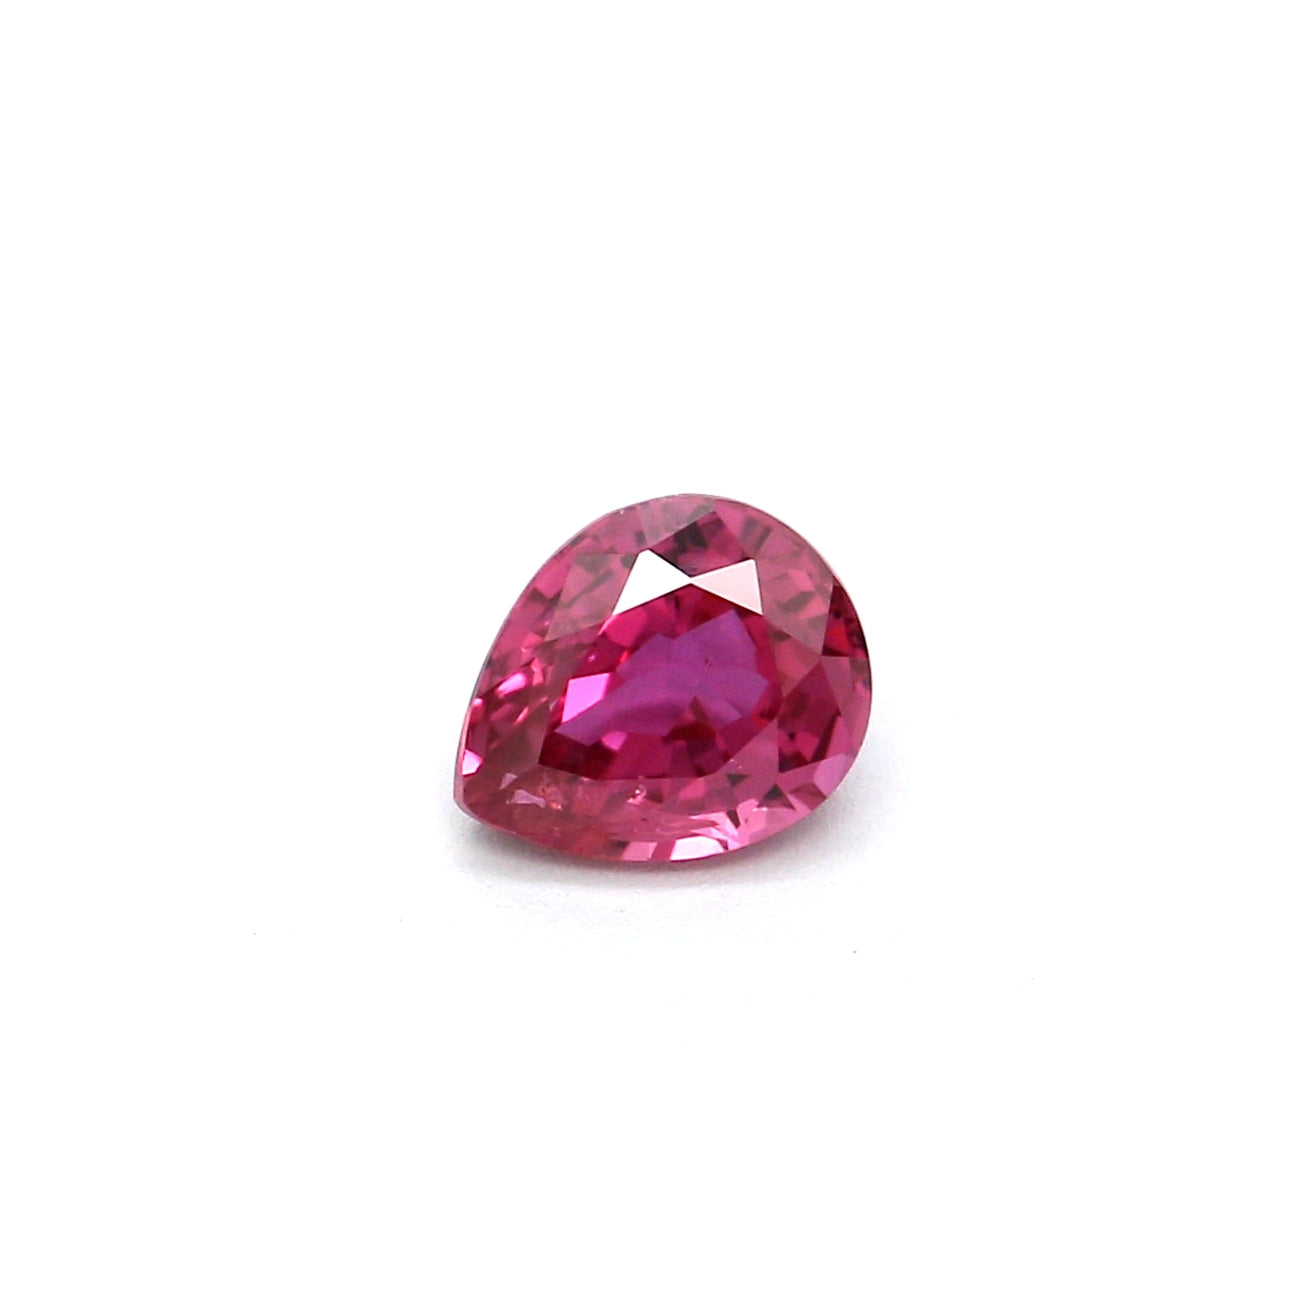 0.39ct Purplish Pink, Pear Shape Sapphire, Heated, Thailand - 4.85 x 3.97 x 2.59mm